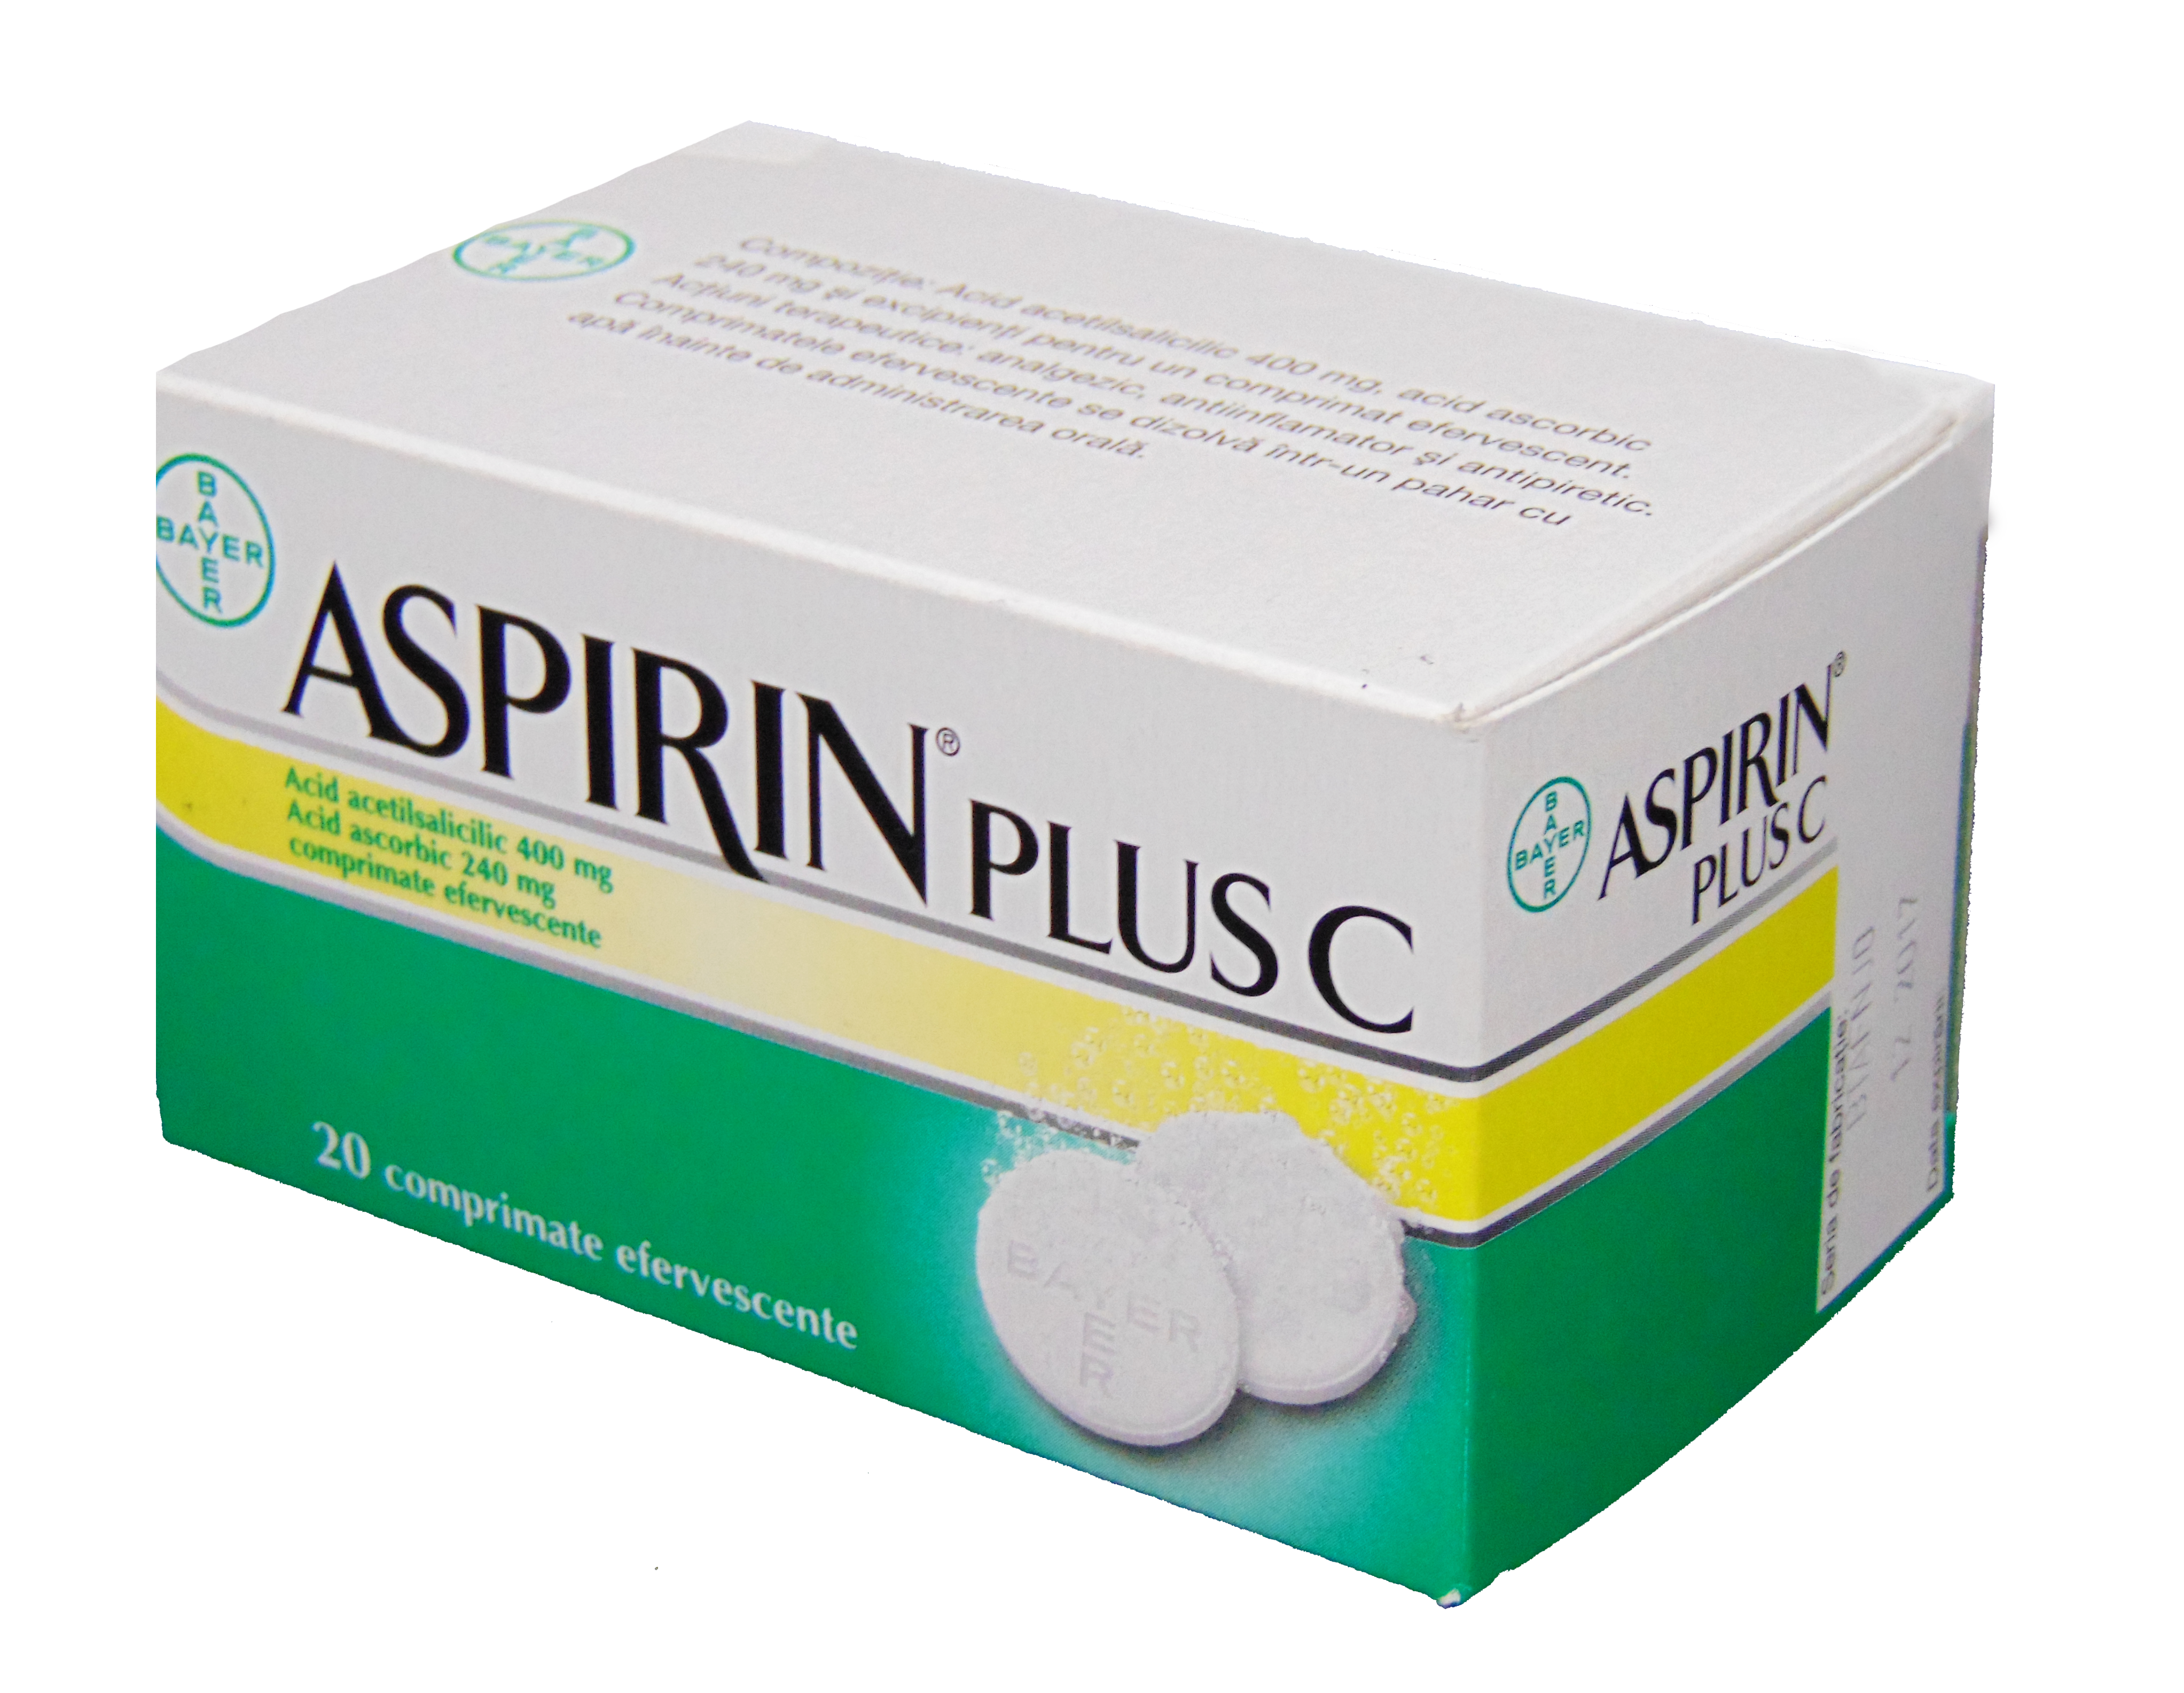 OTC - medicamente fara reteta - Aspirin Plus C x 20 comprimate efervescente, medik-on.ro